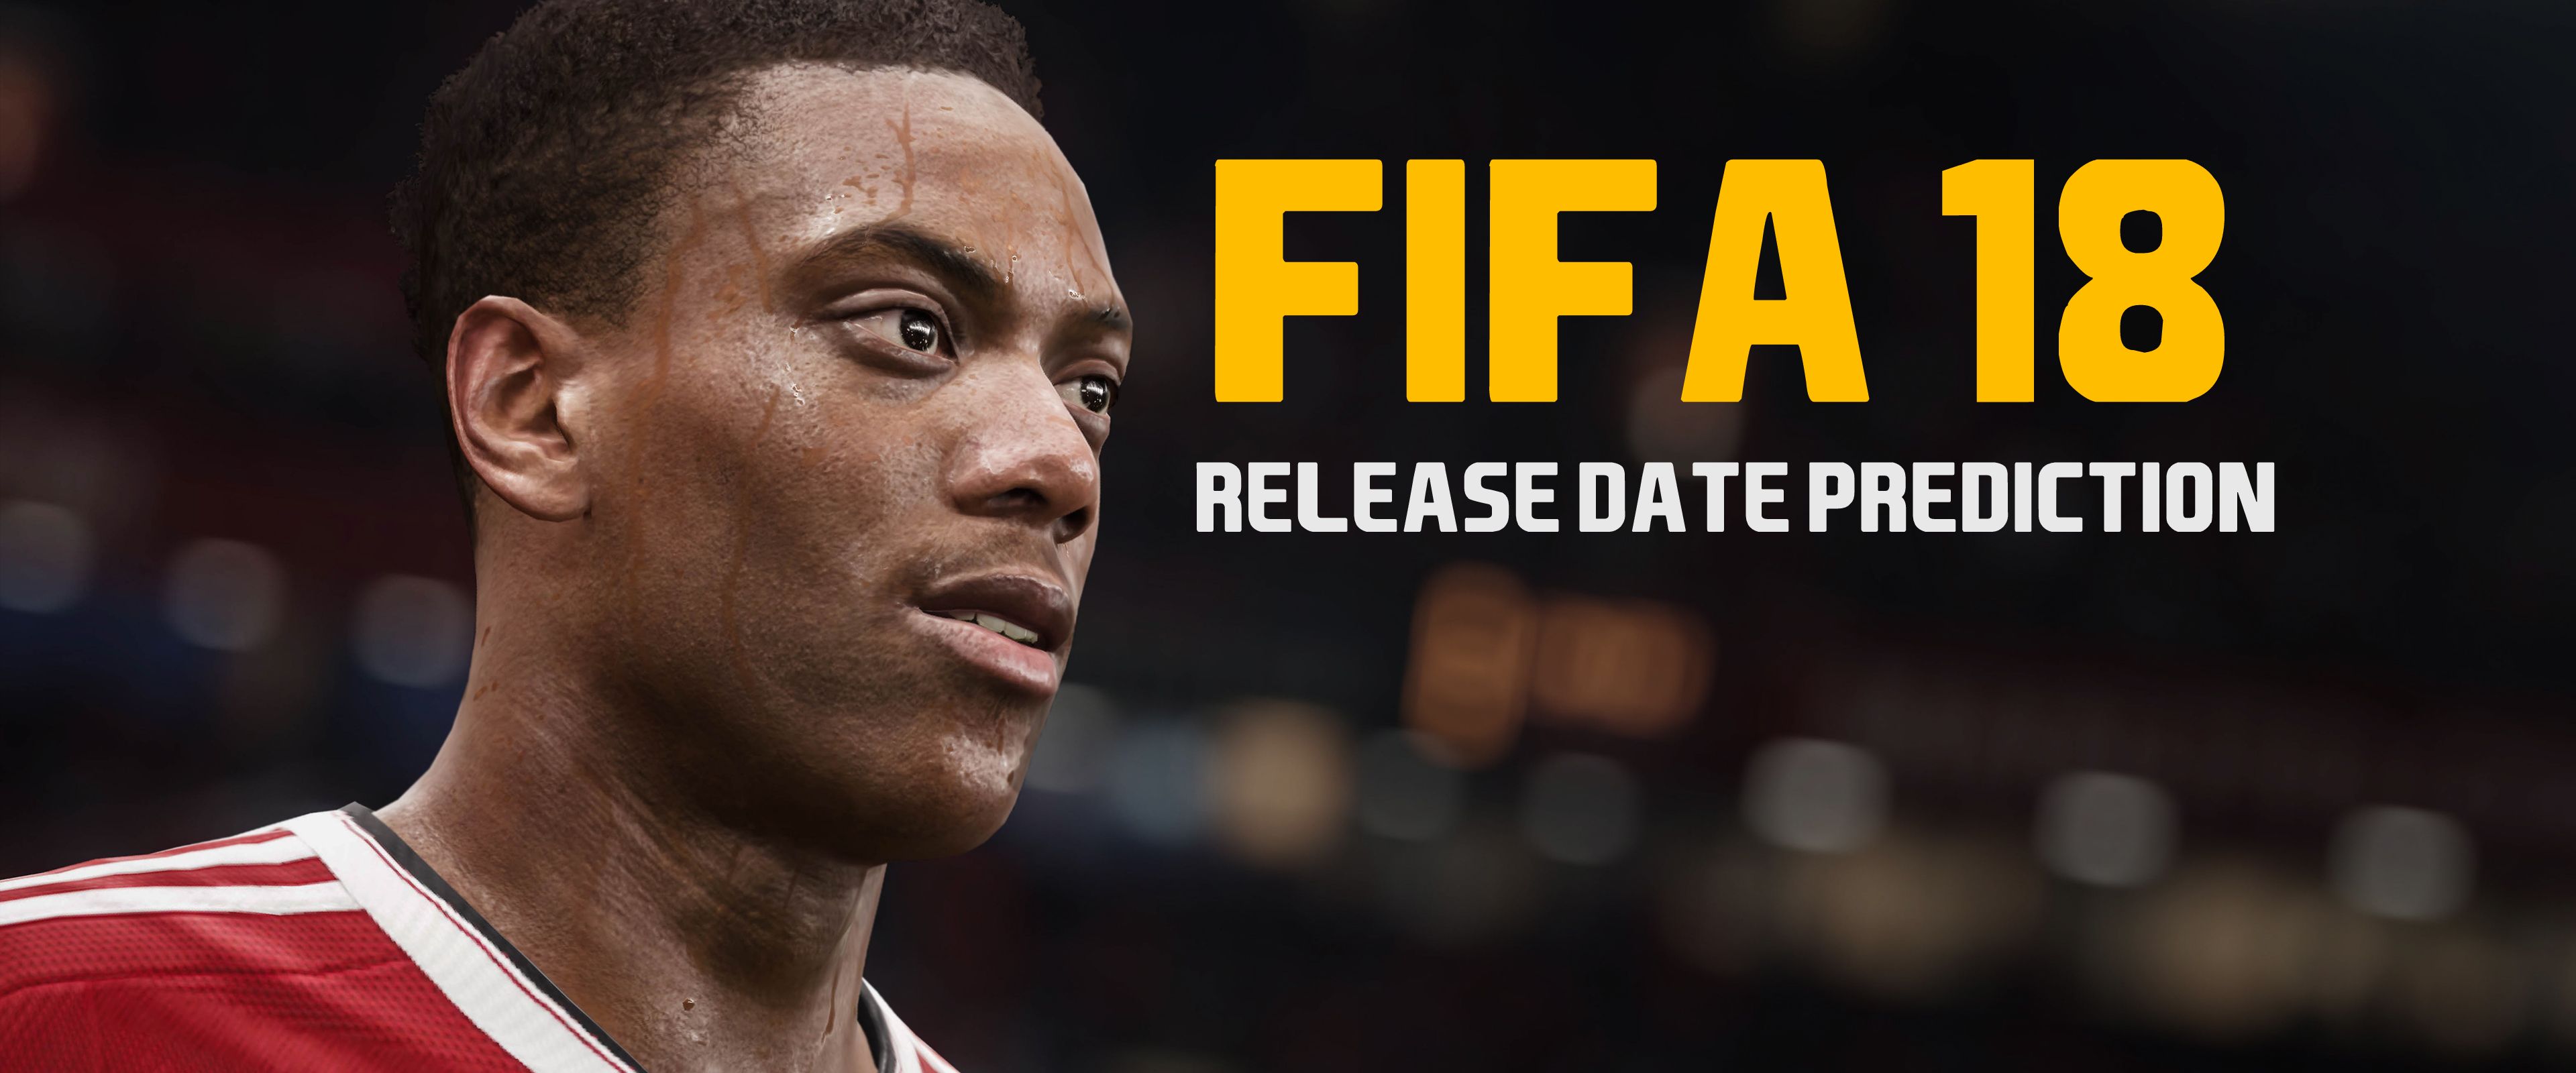 FIFA 18 Release Date